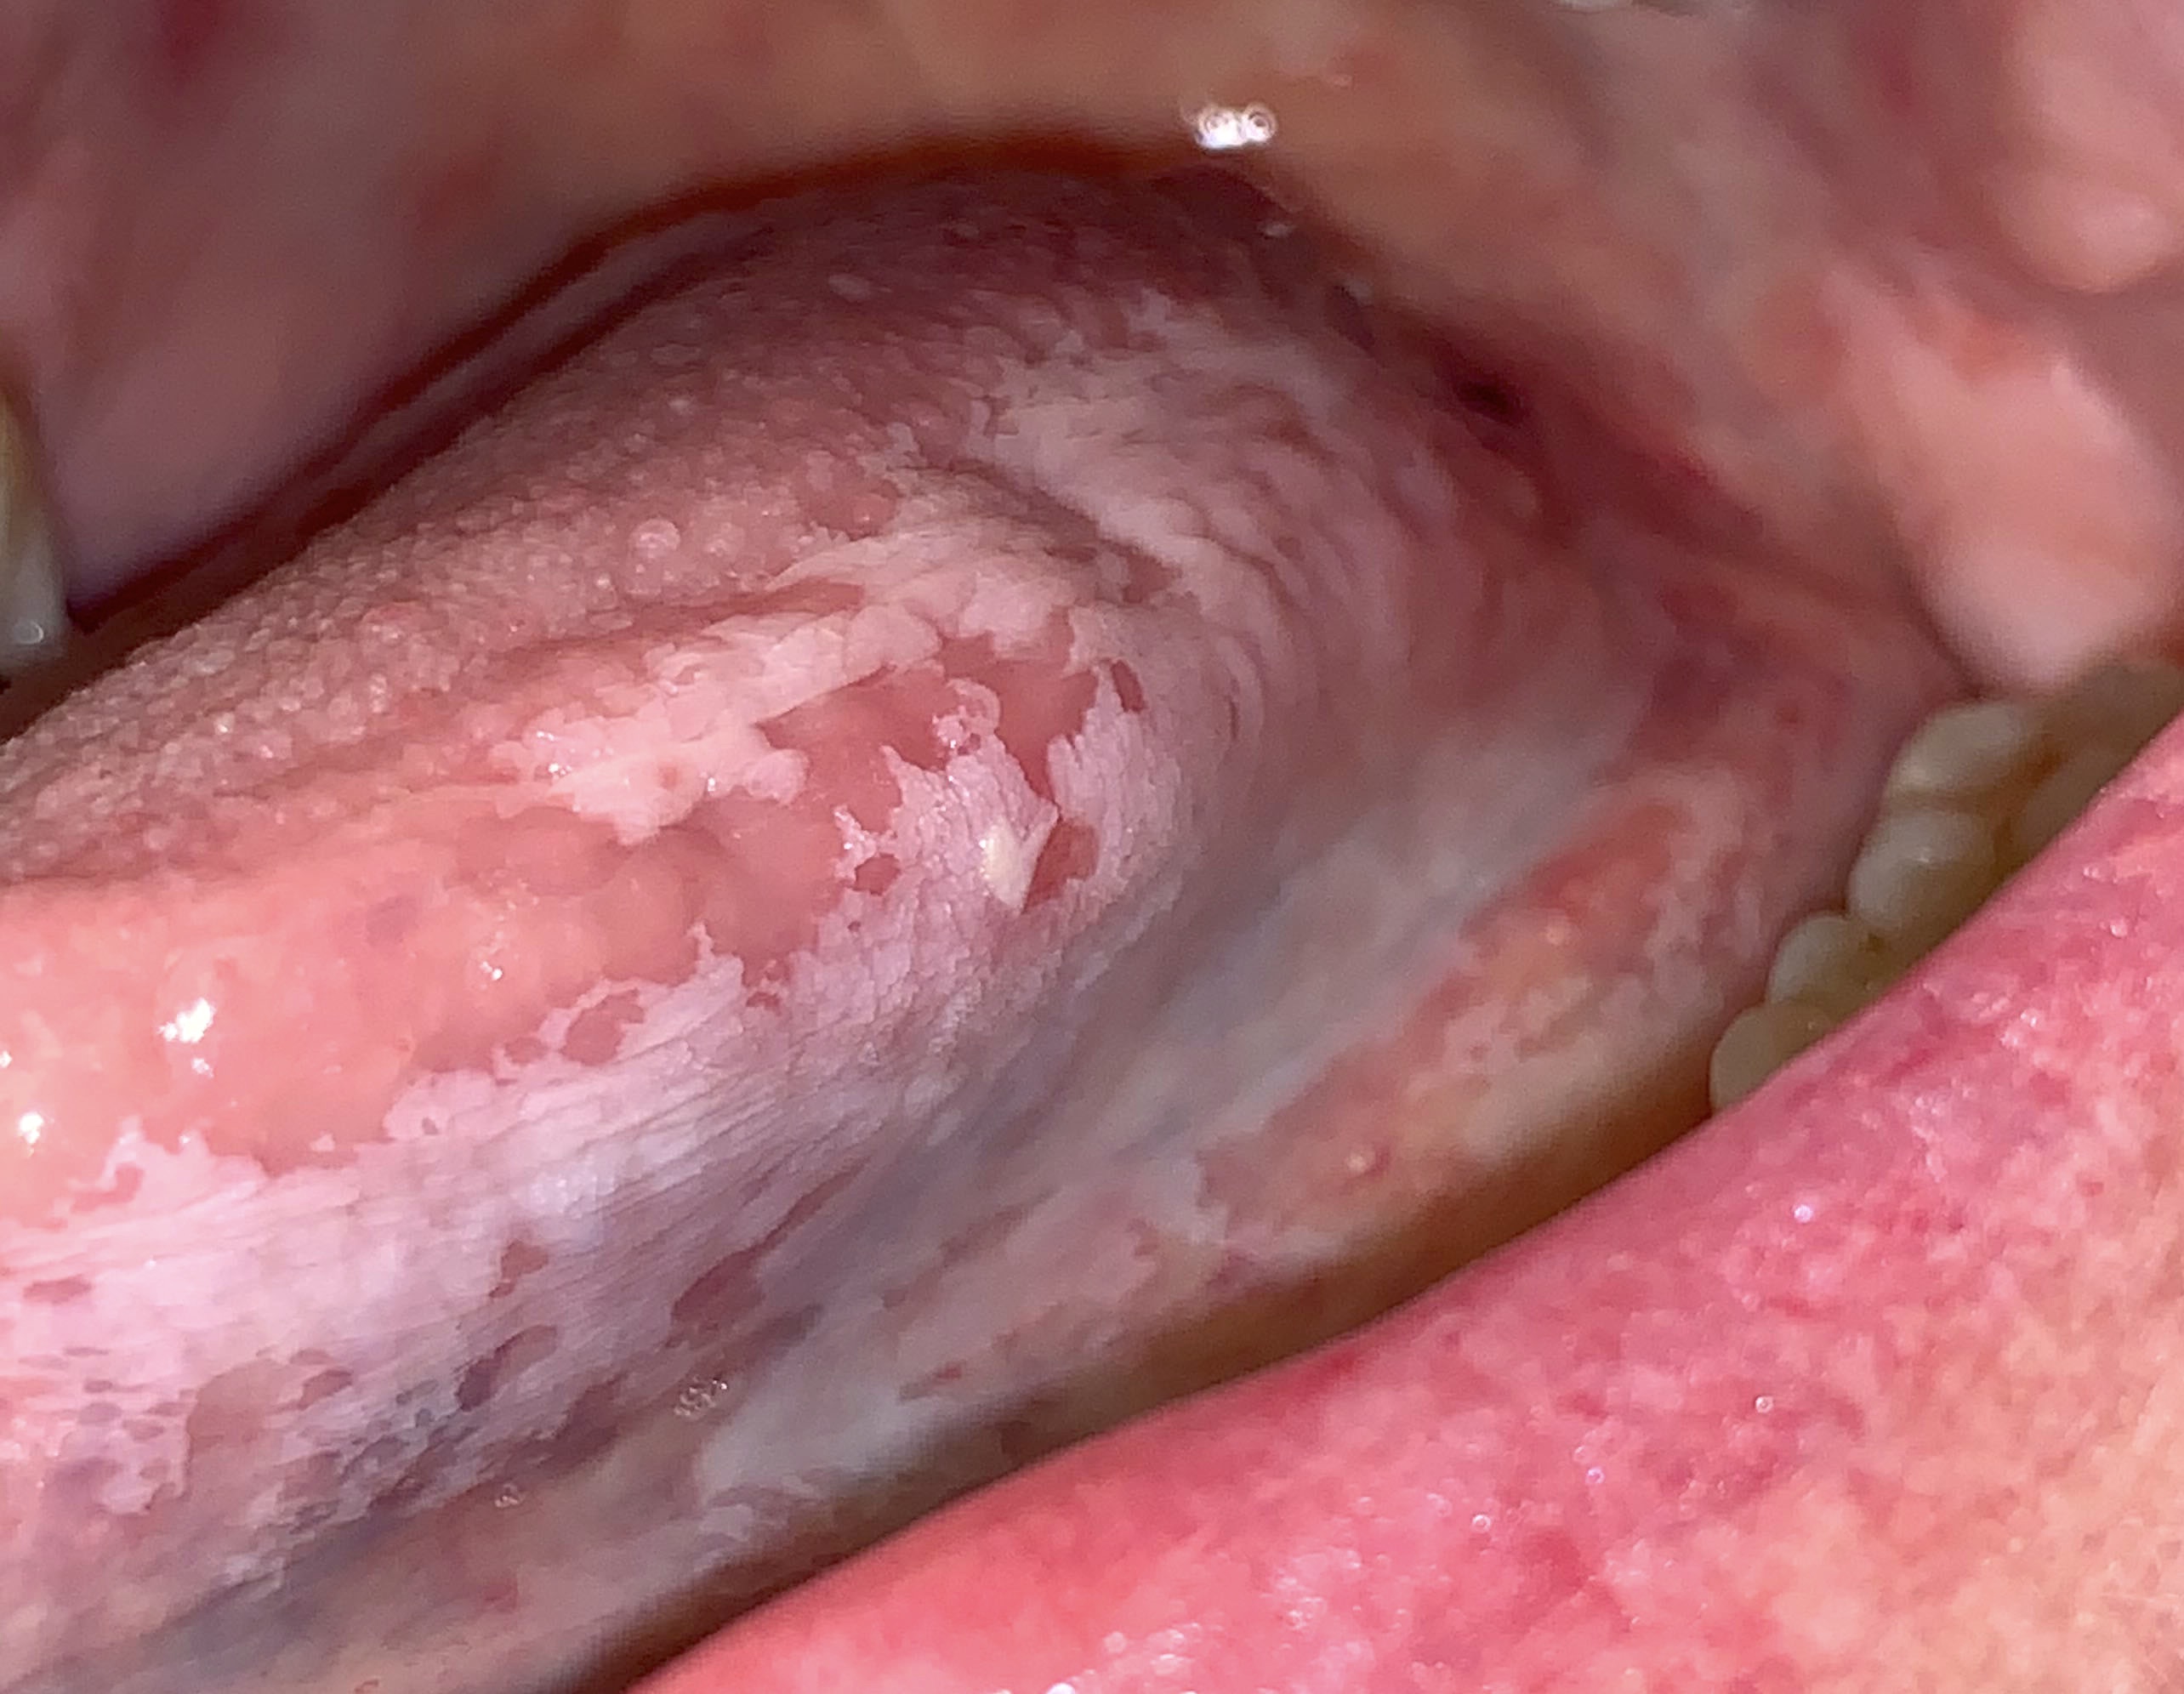 Extensive leukoplakia of tongue